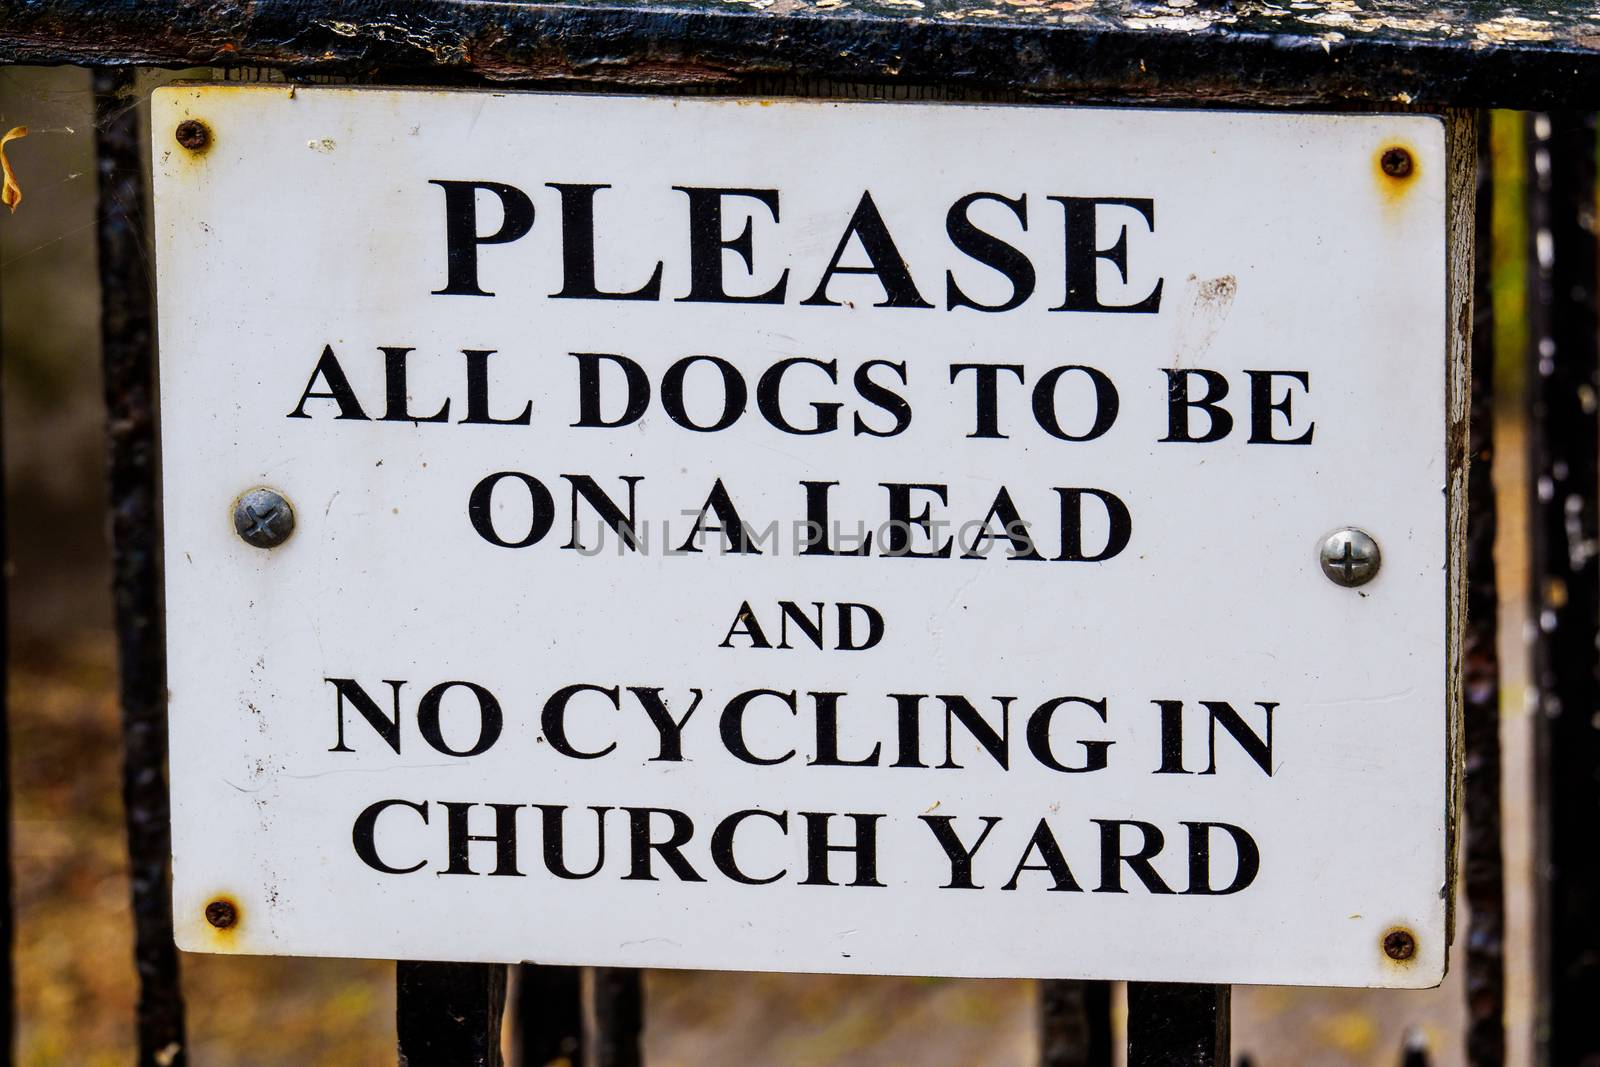 Keep all dogs on lead sign on churchyard UK